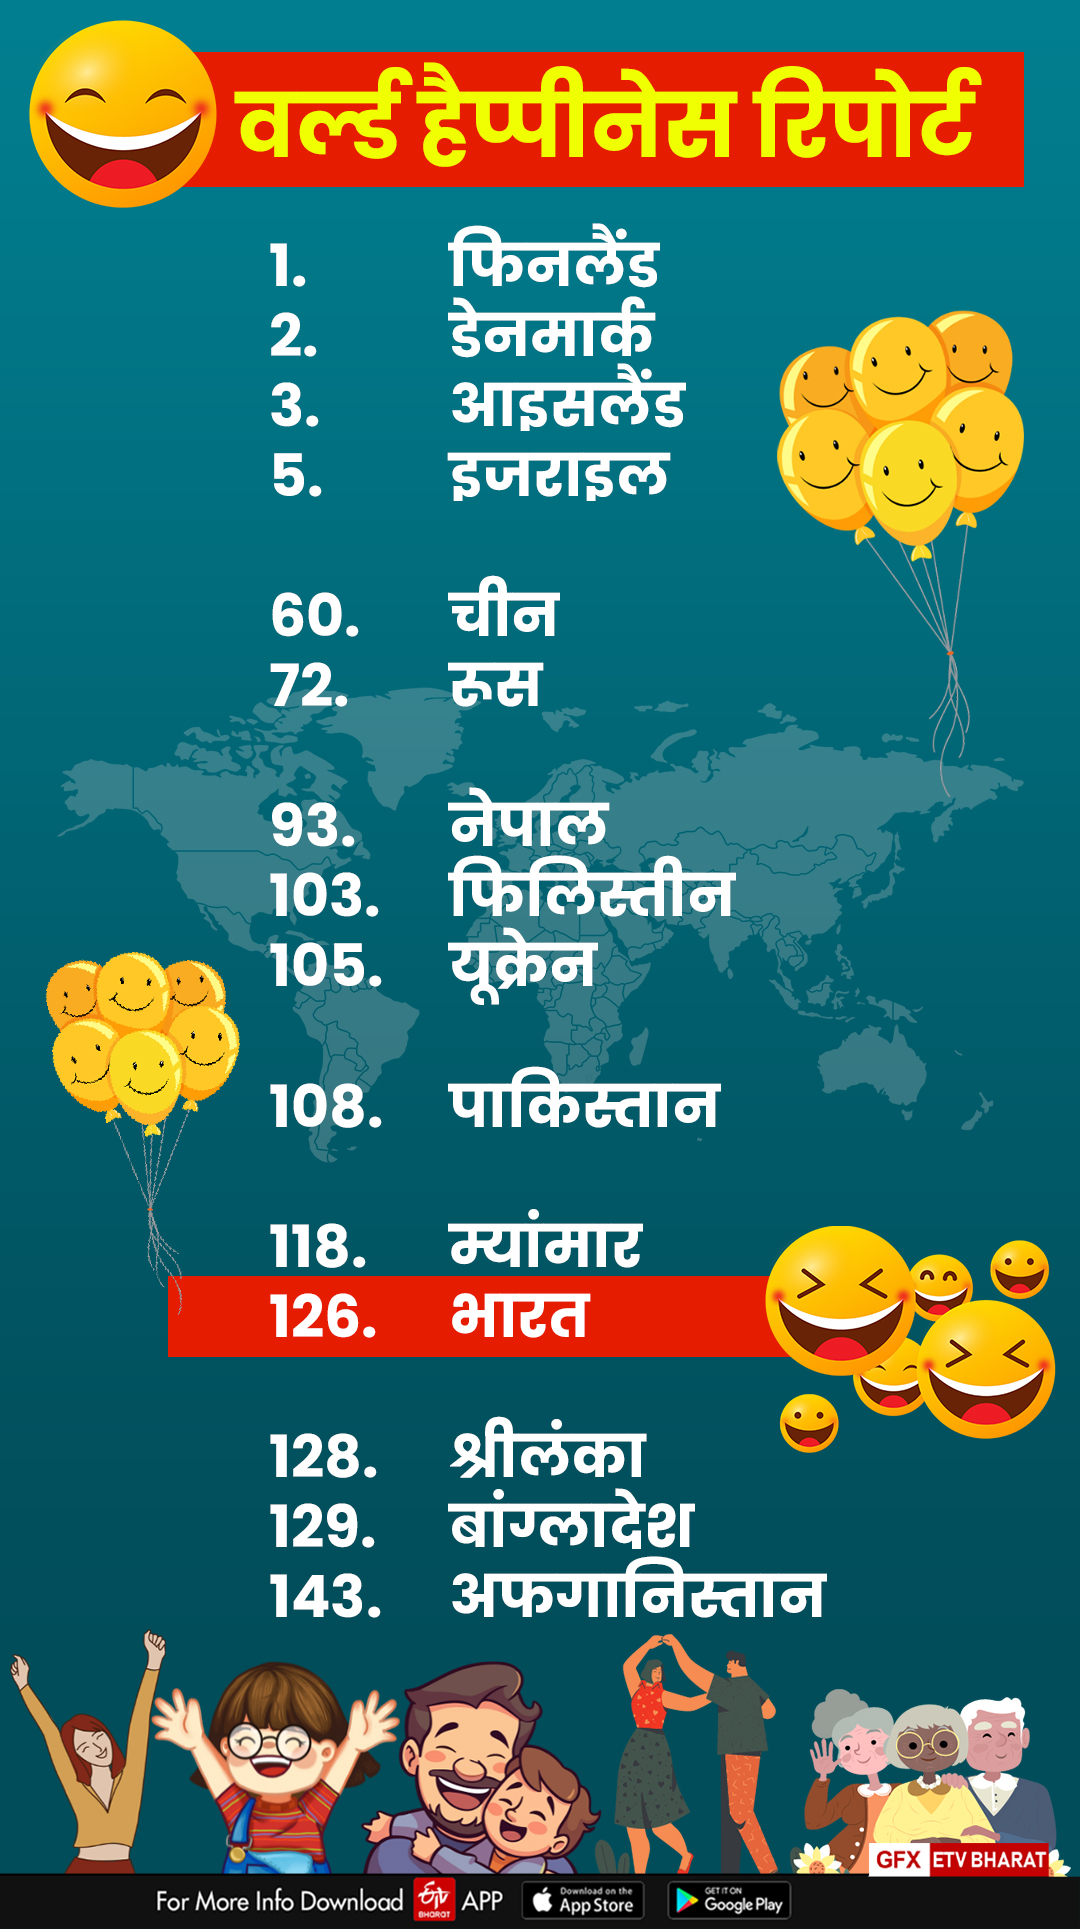 World happiness index